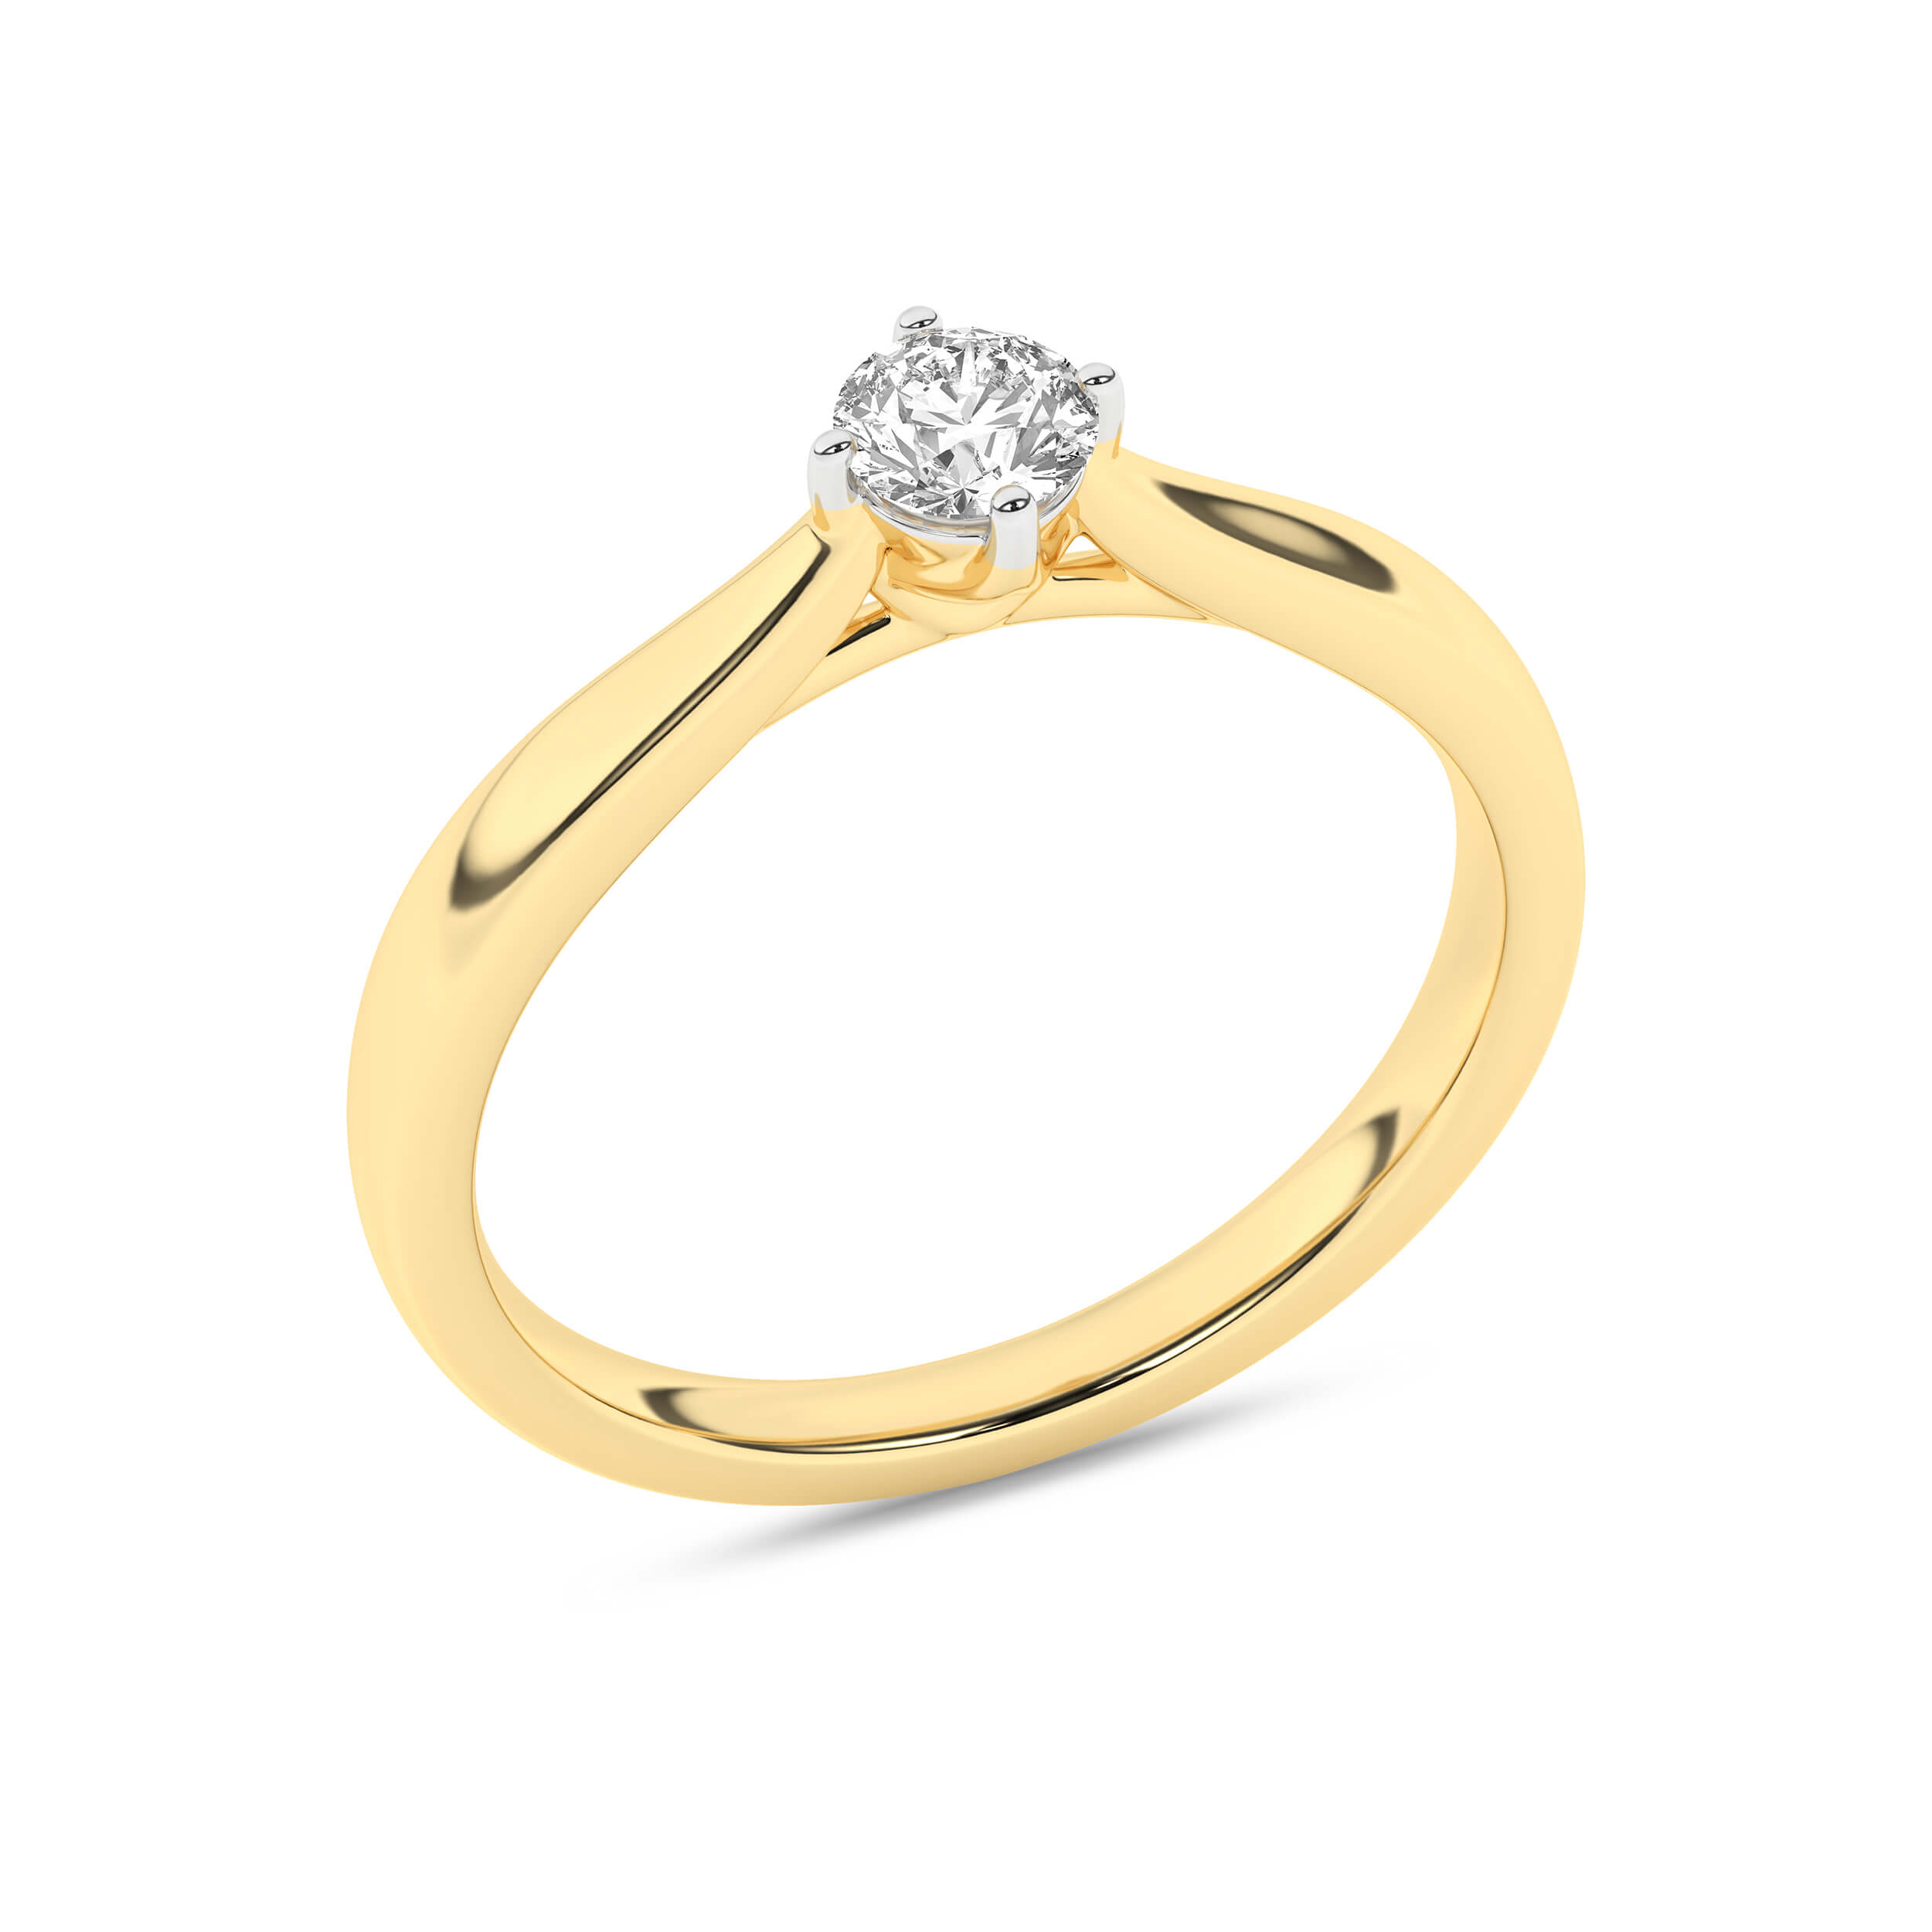 Inel de logodna din Aur Galben 14K cu Diamant 0.25Ct, articol RS1441, previzualizare foto 4